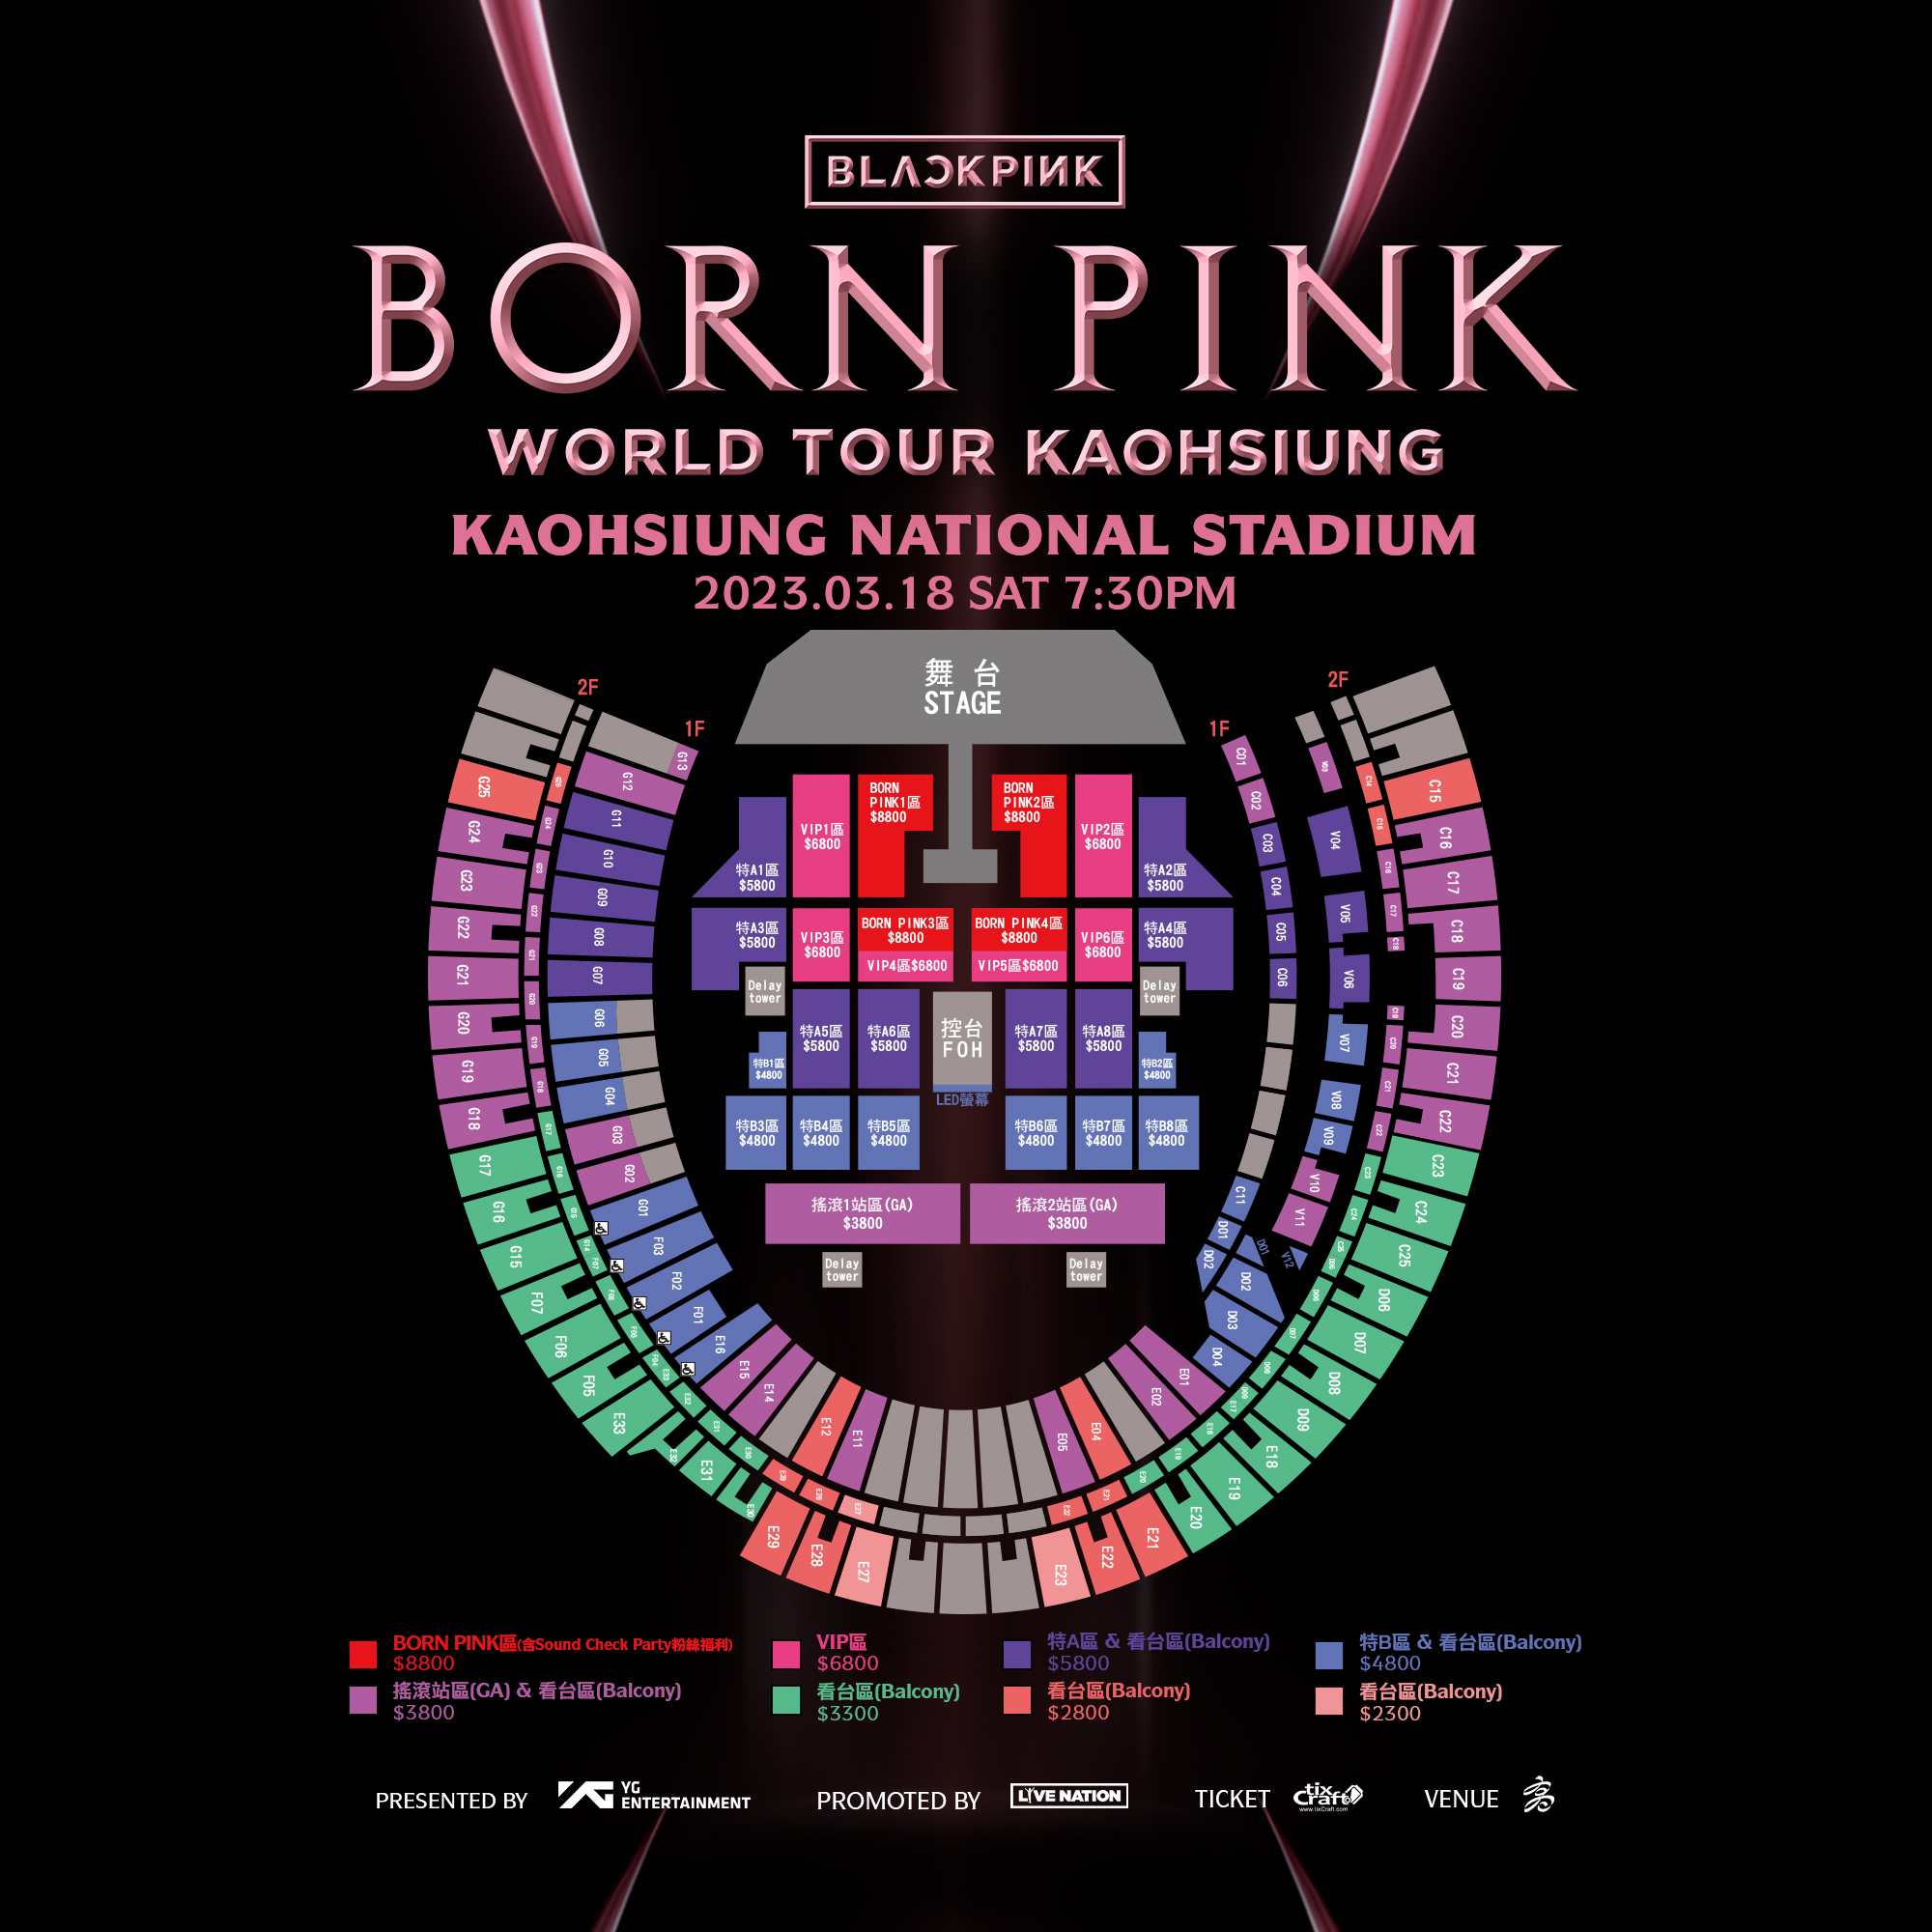 born pink tour total gross